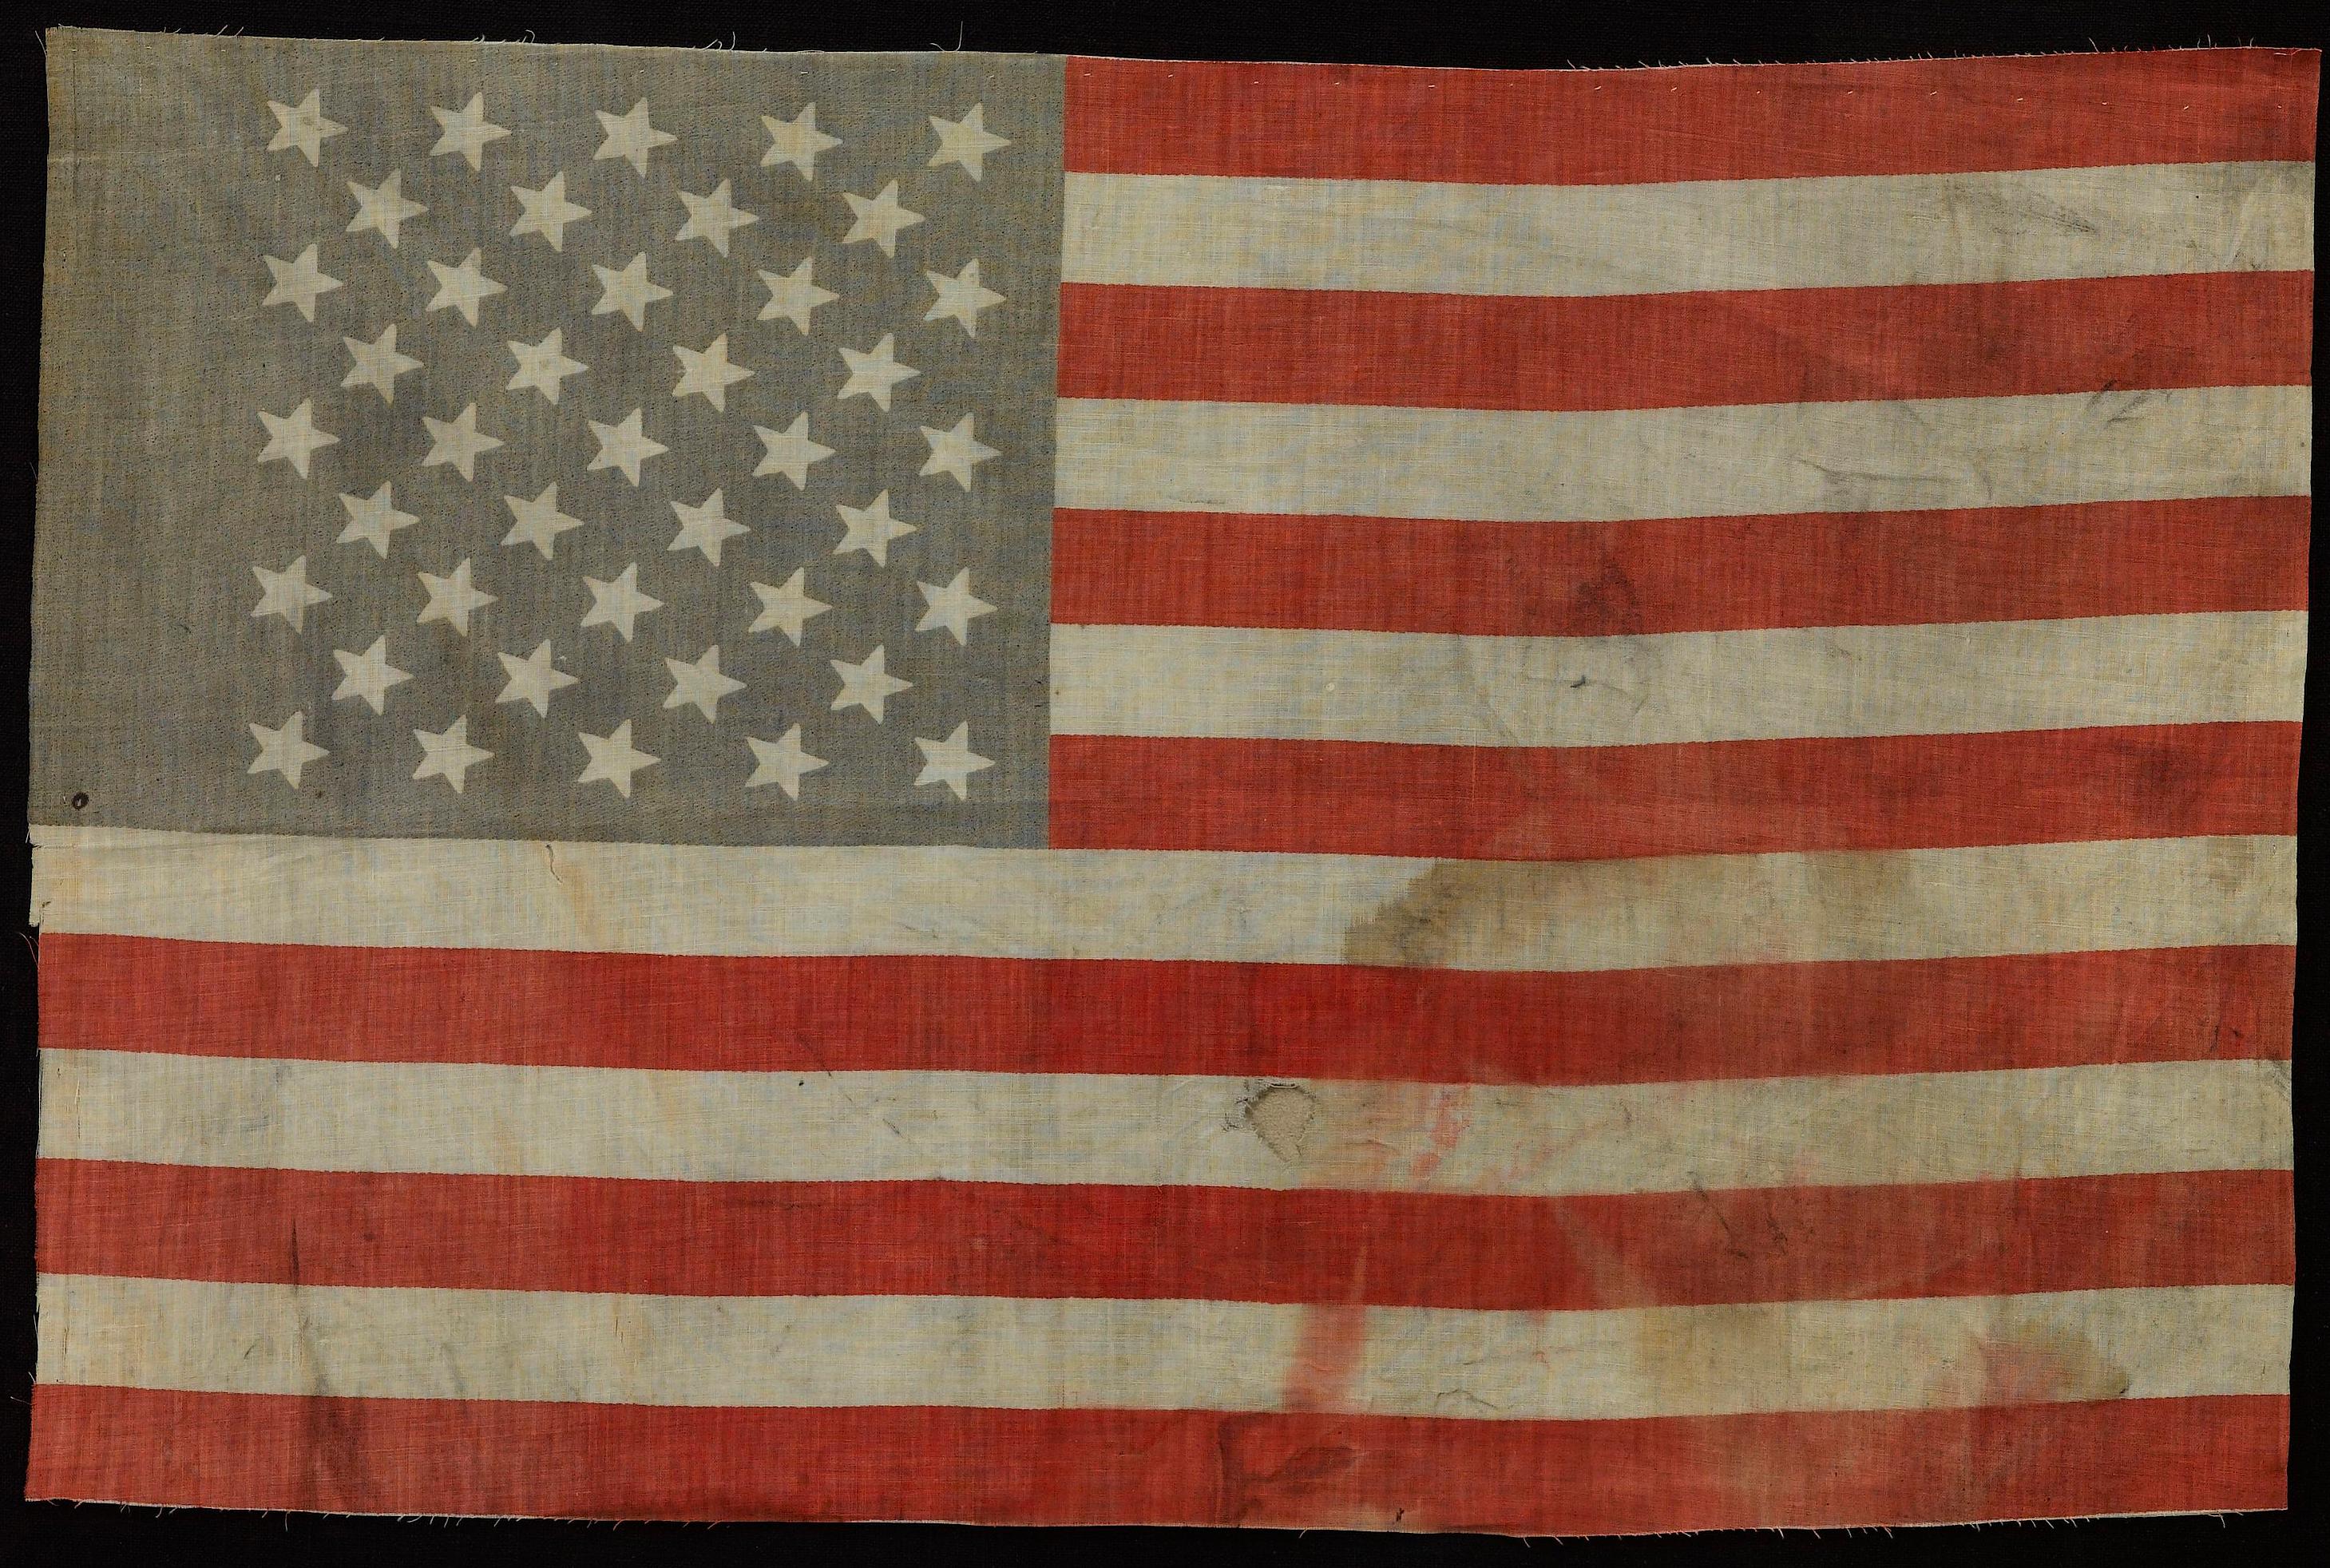 Late 19th Century 41-Star American Printed Flag, Celebrating Montana Statehood, 1889